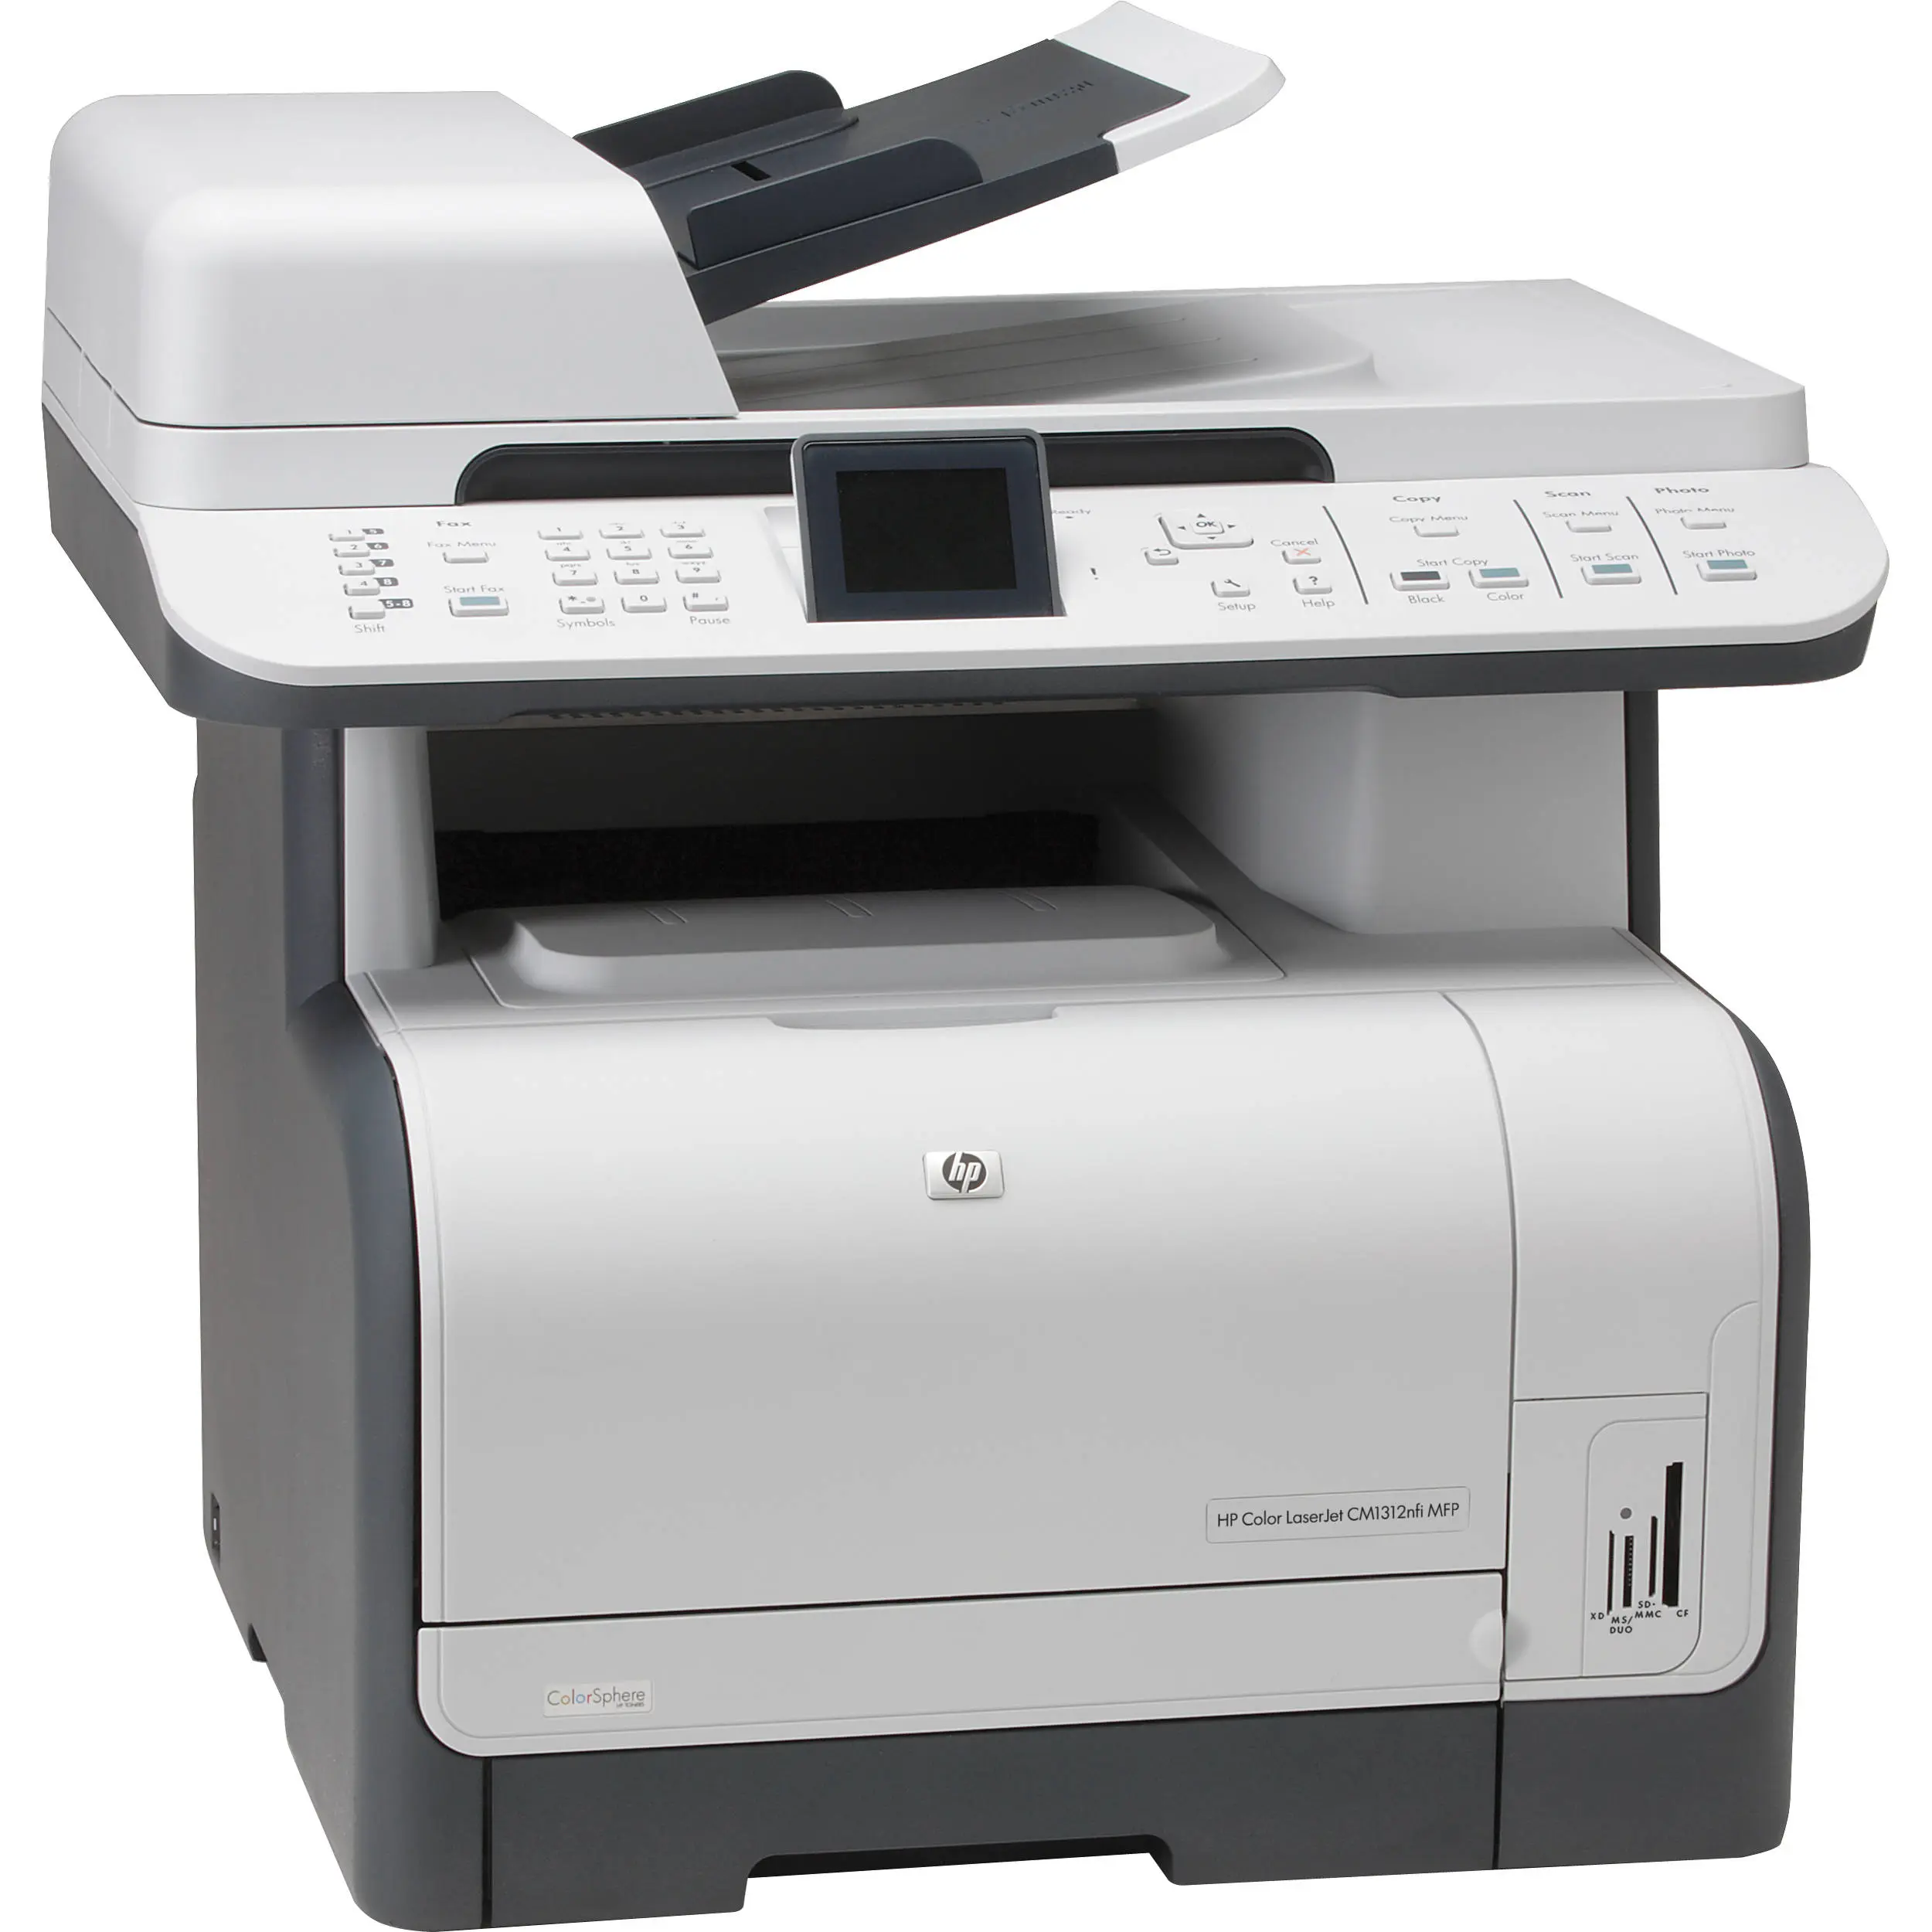 Hp cm1312nfi multifunction printer: efficient printing & scanning